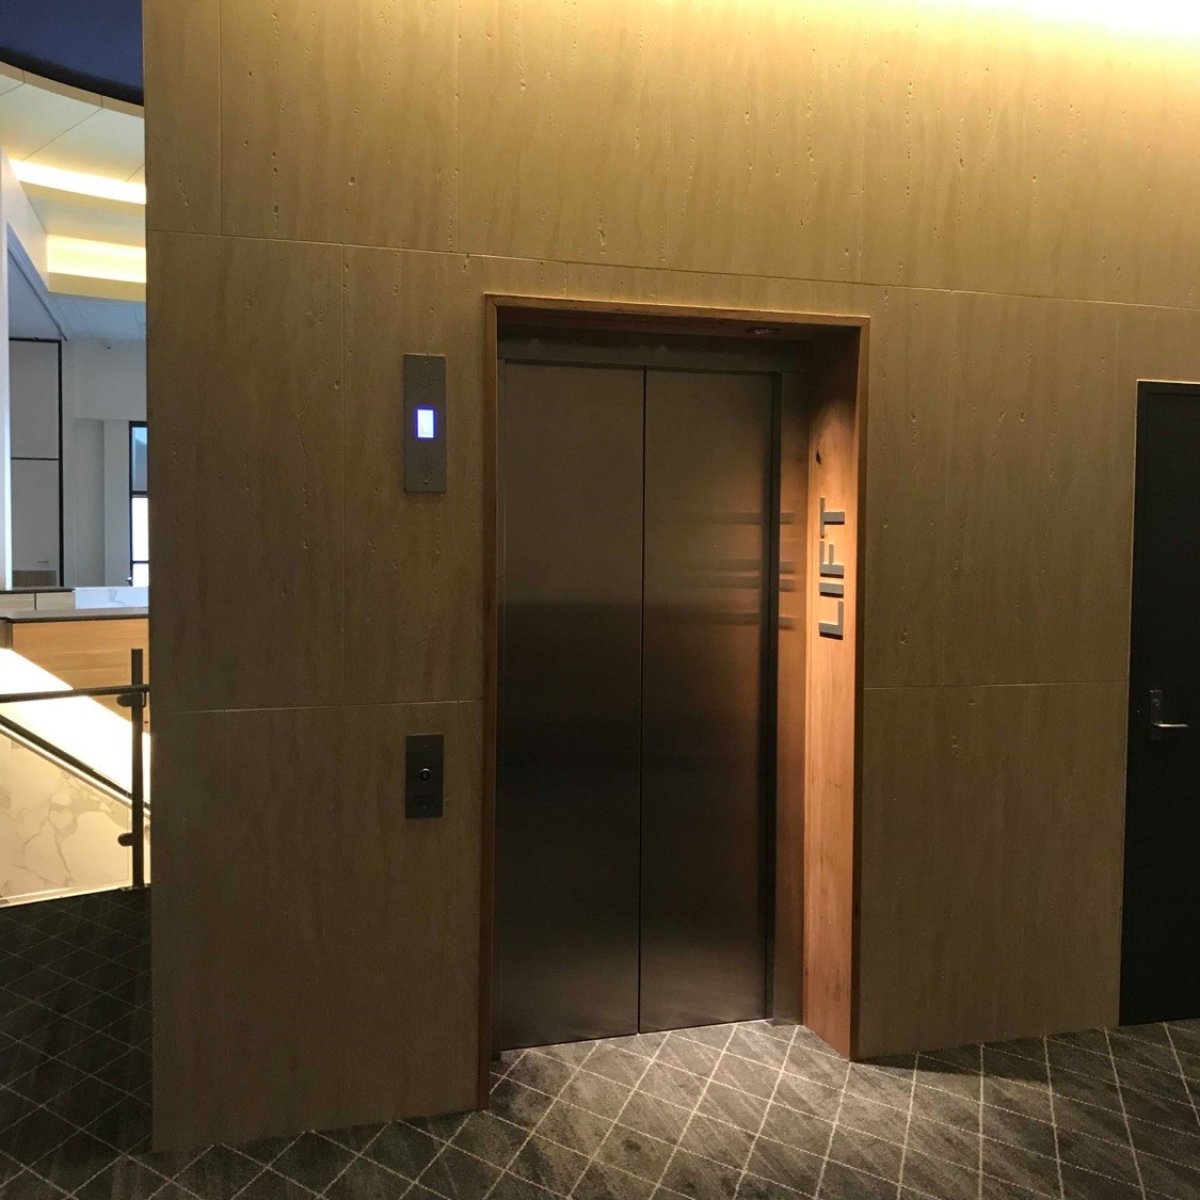  Commercial Elevators Australia | Simplex Elevators Gallery Image 8